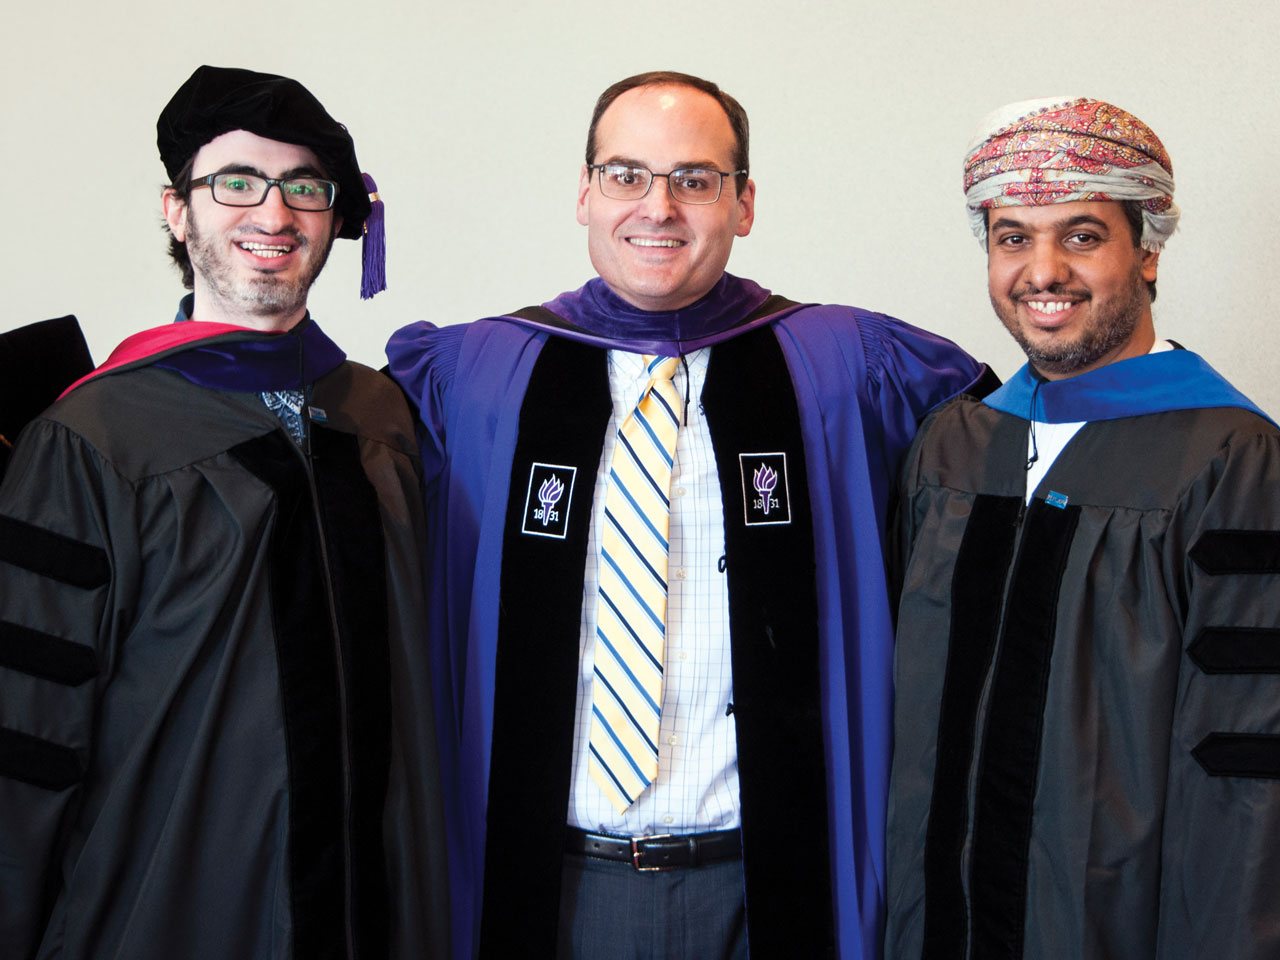 Dean Stephen Mazza, center, with two School of Law alumni.